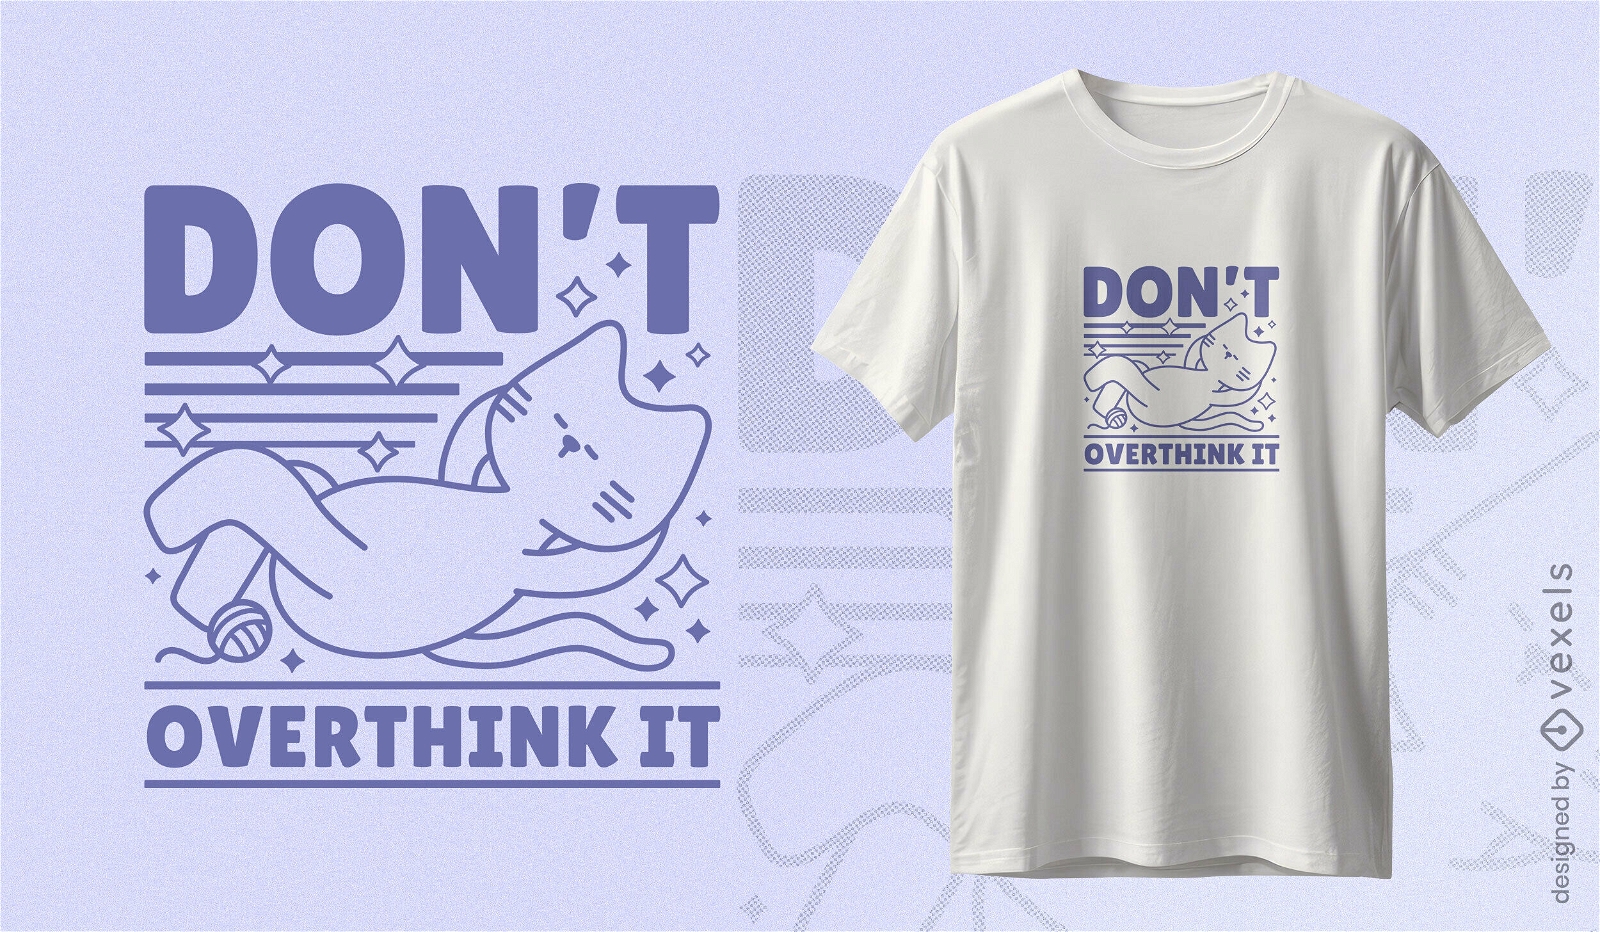 Don't overthink cat t-shirt design